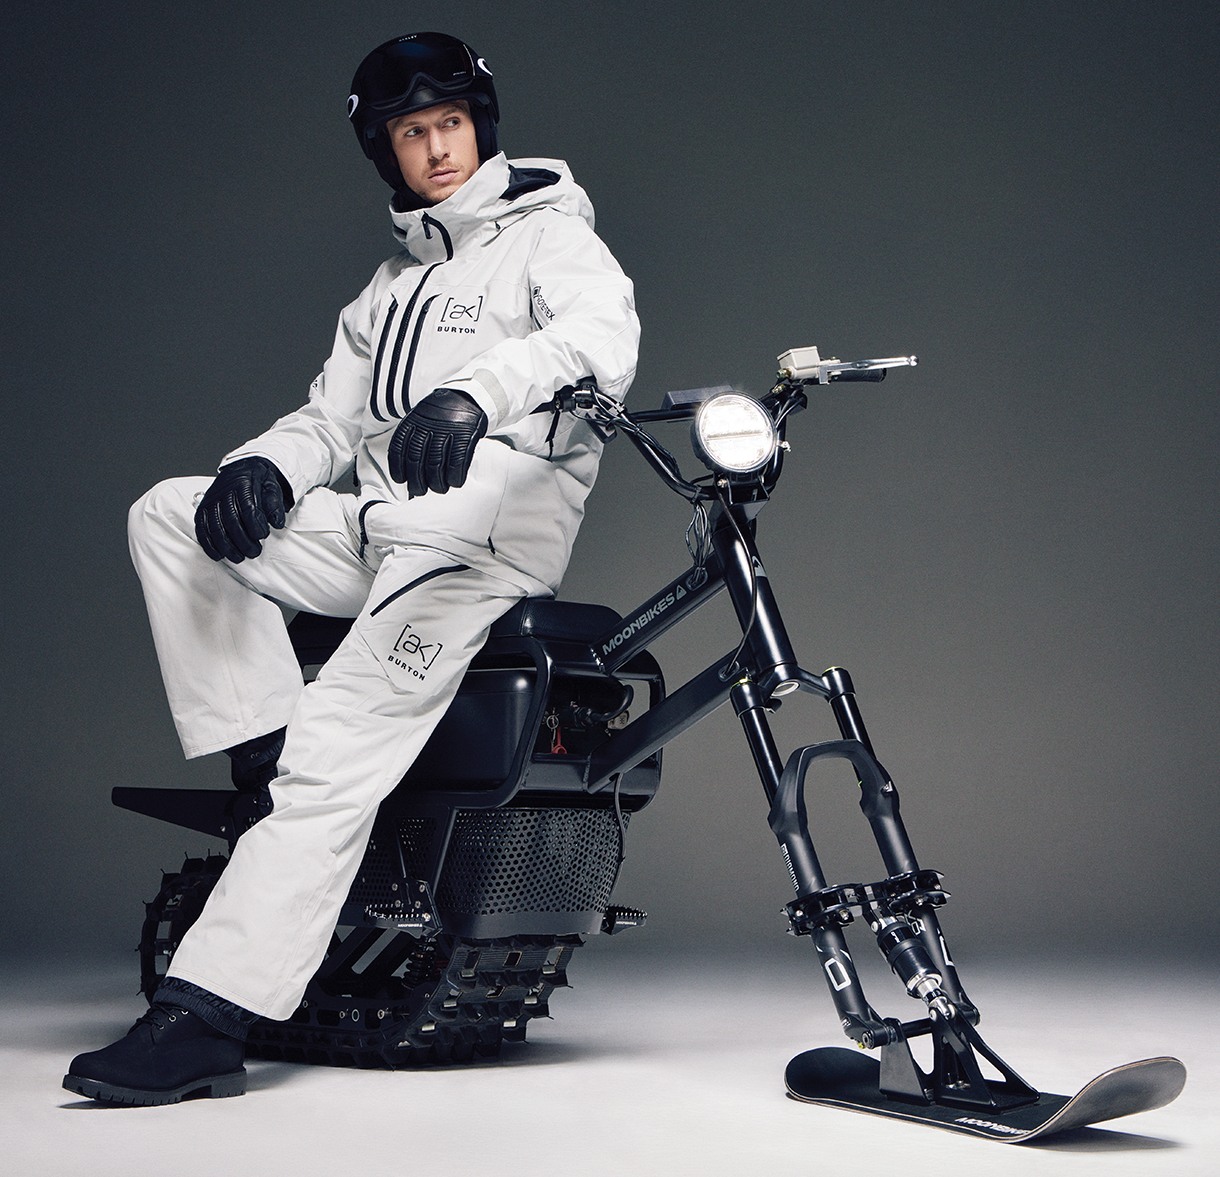 Man with snow apparel and helmet sitting on black Moonbike